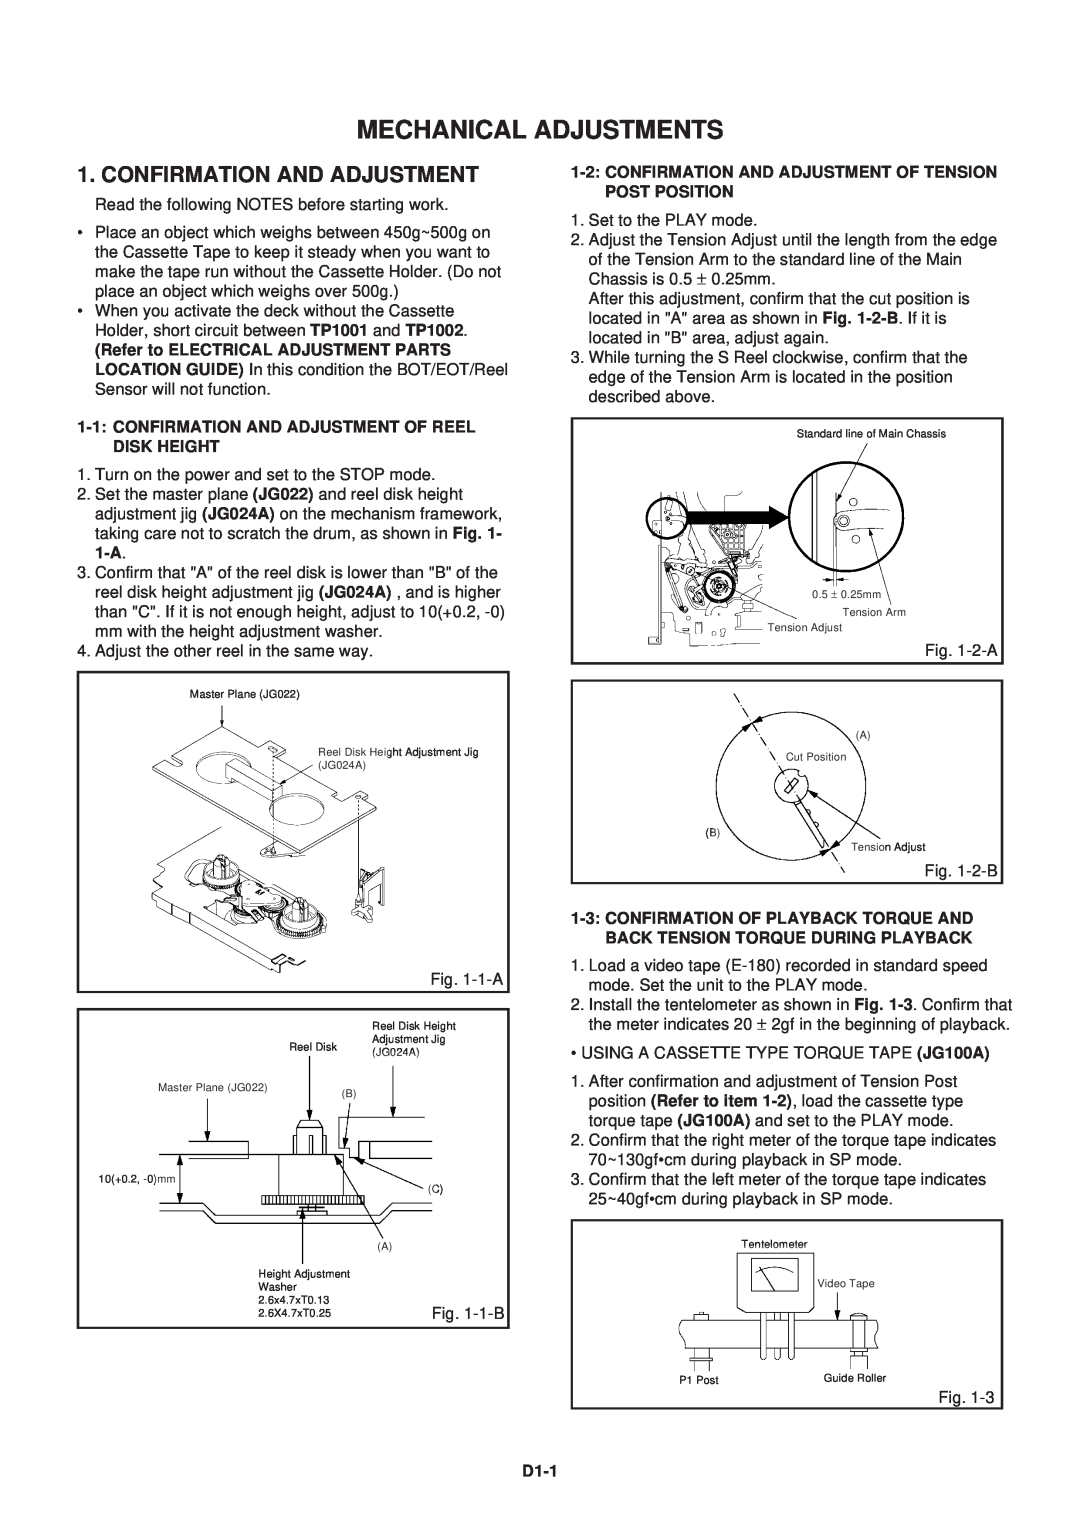 Aiwa HV-FX5100 service manual Mechanical Adjustments, Confirmation And Adjustment, D1-1 